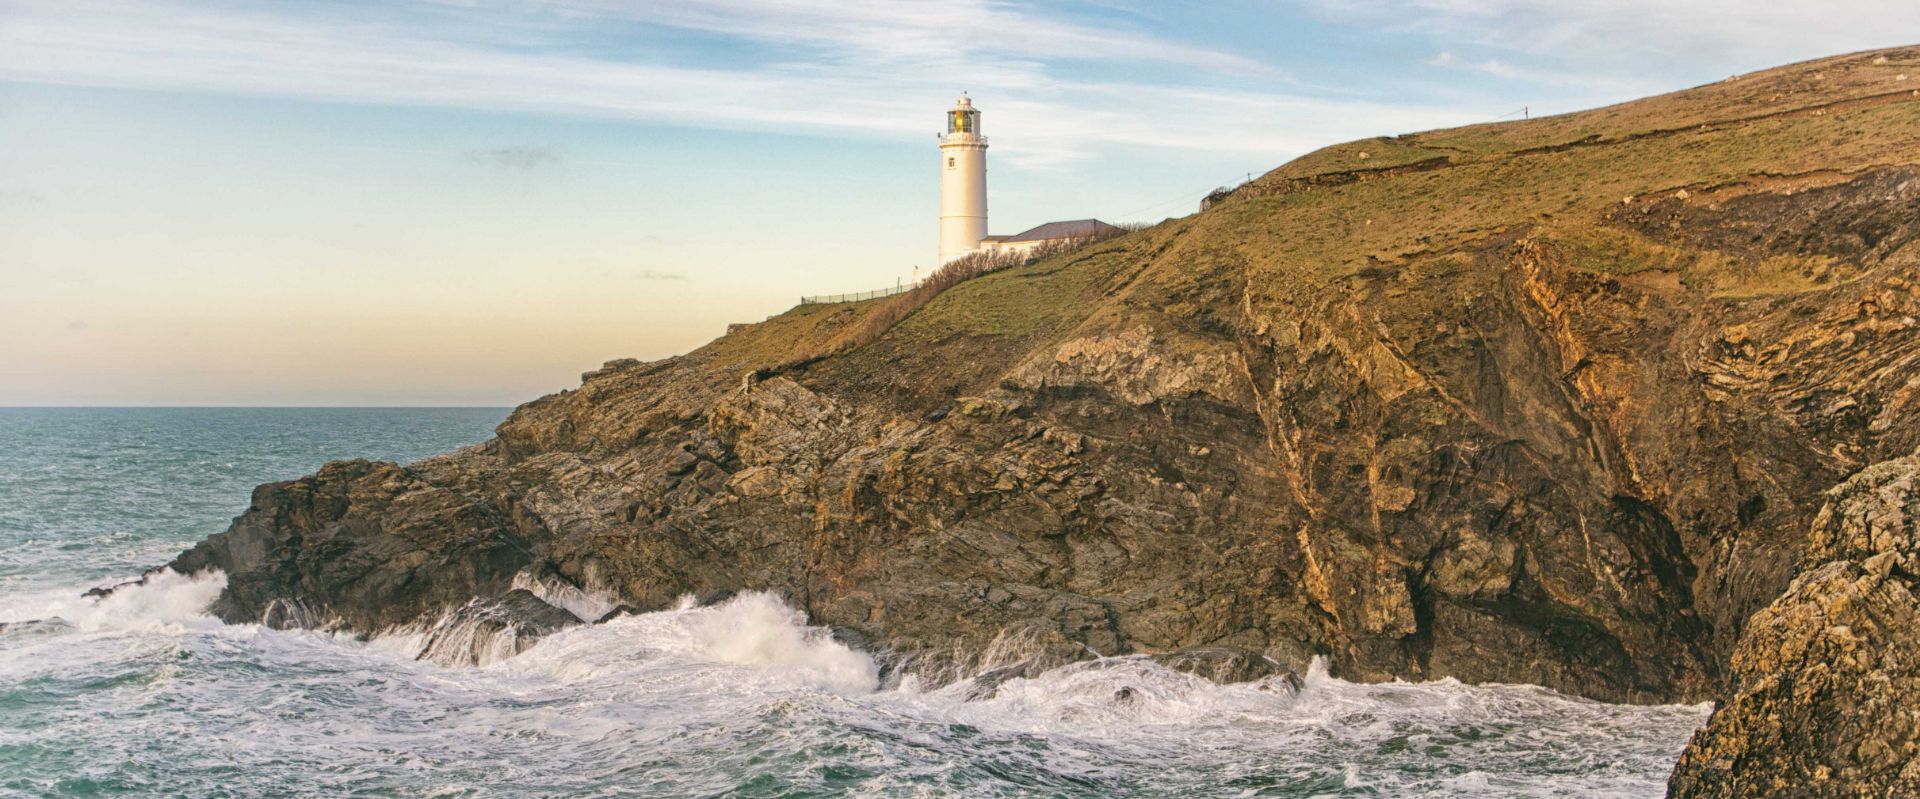 Trevose Head Lighthouse on the Northern coast of Cornwall